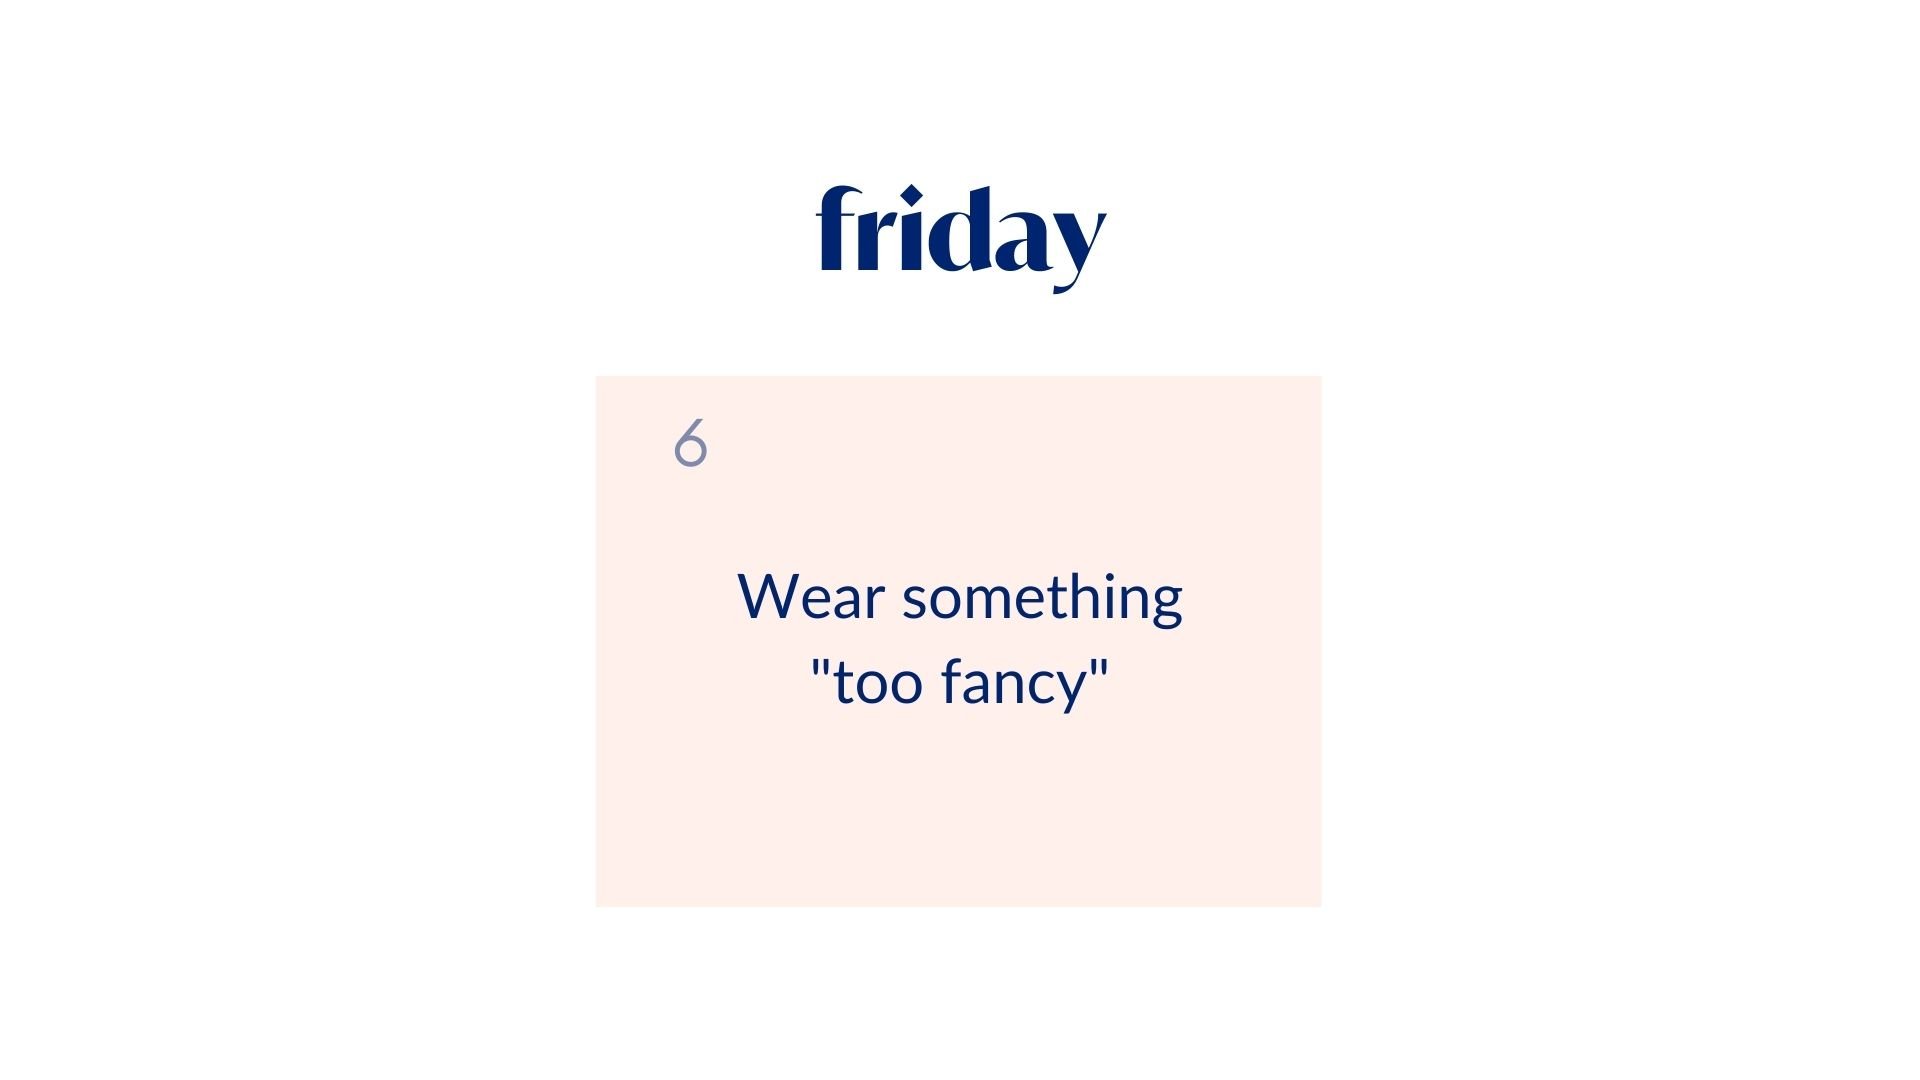 Day 6: Wear something "too fancy"